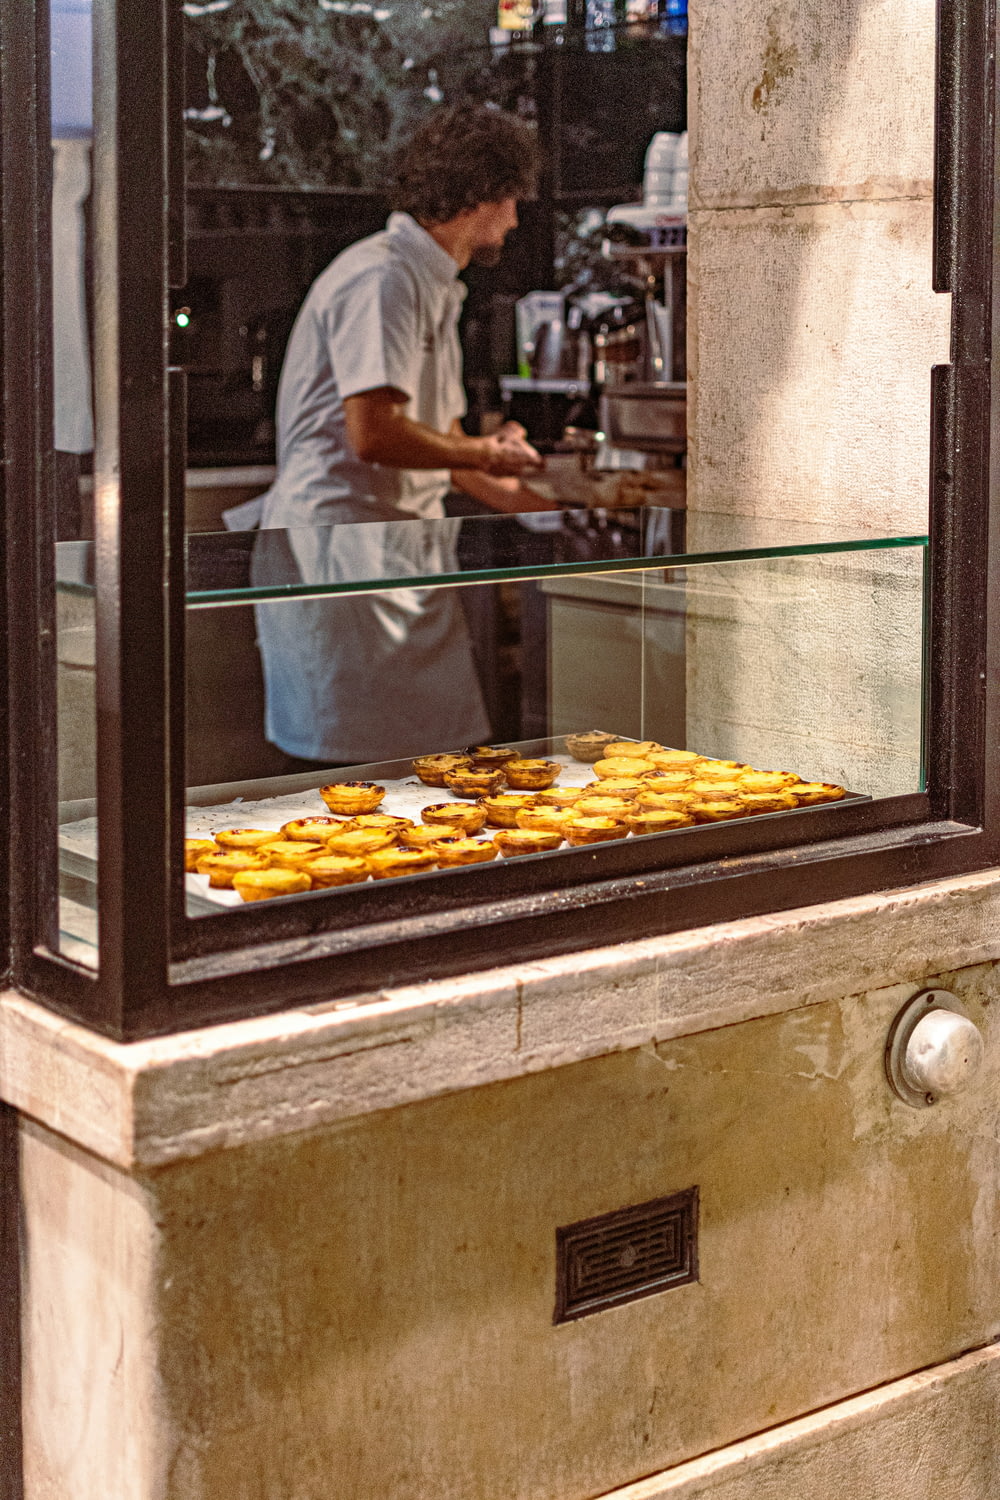 a man preparing food behind a glass counter